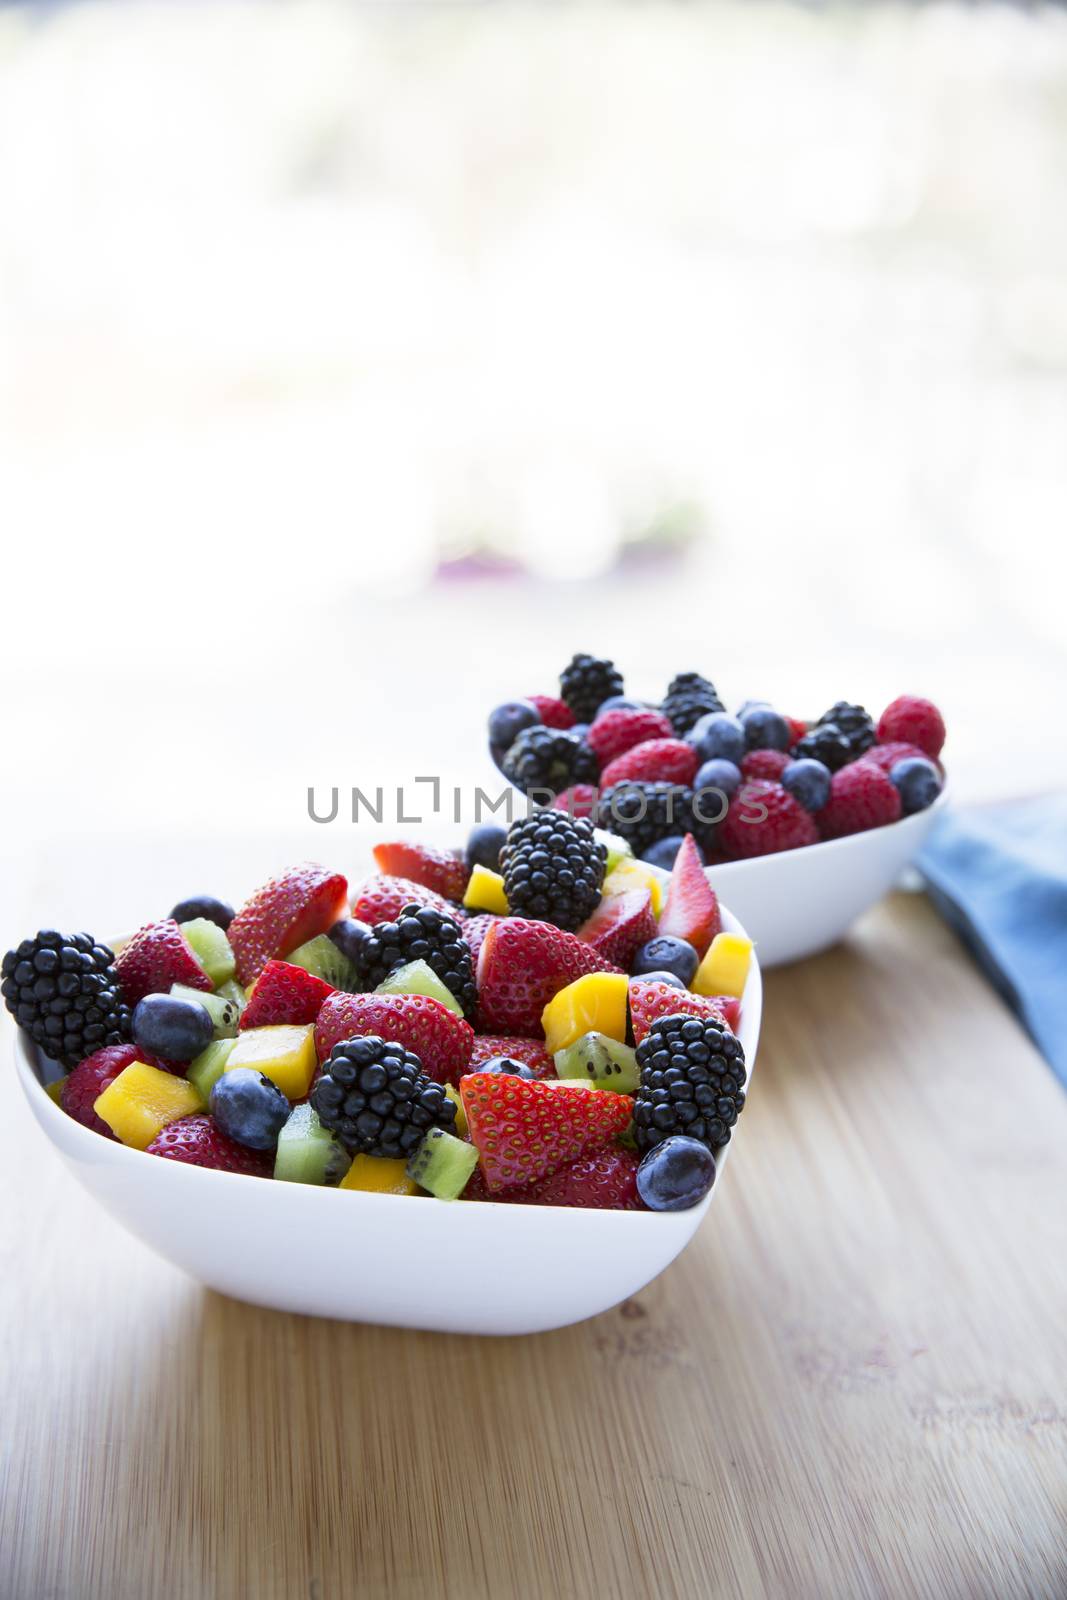 Healthy fresh fruit salad with strawberries, blackberries, mango, blueberries and kiwi.